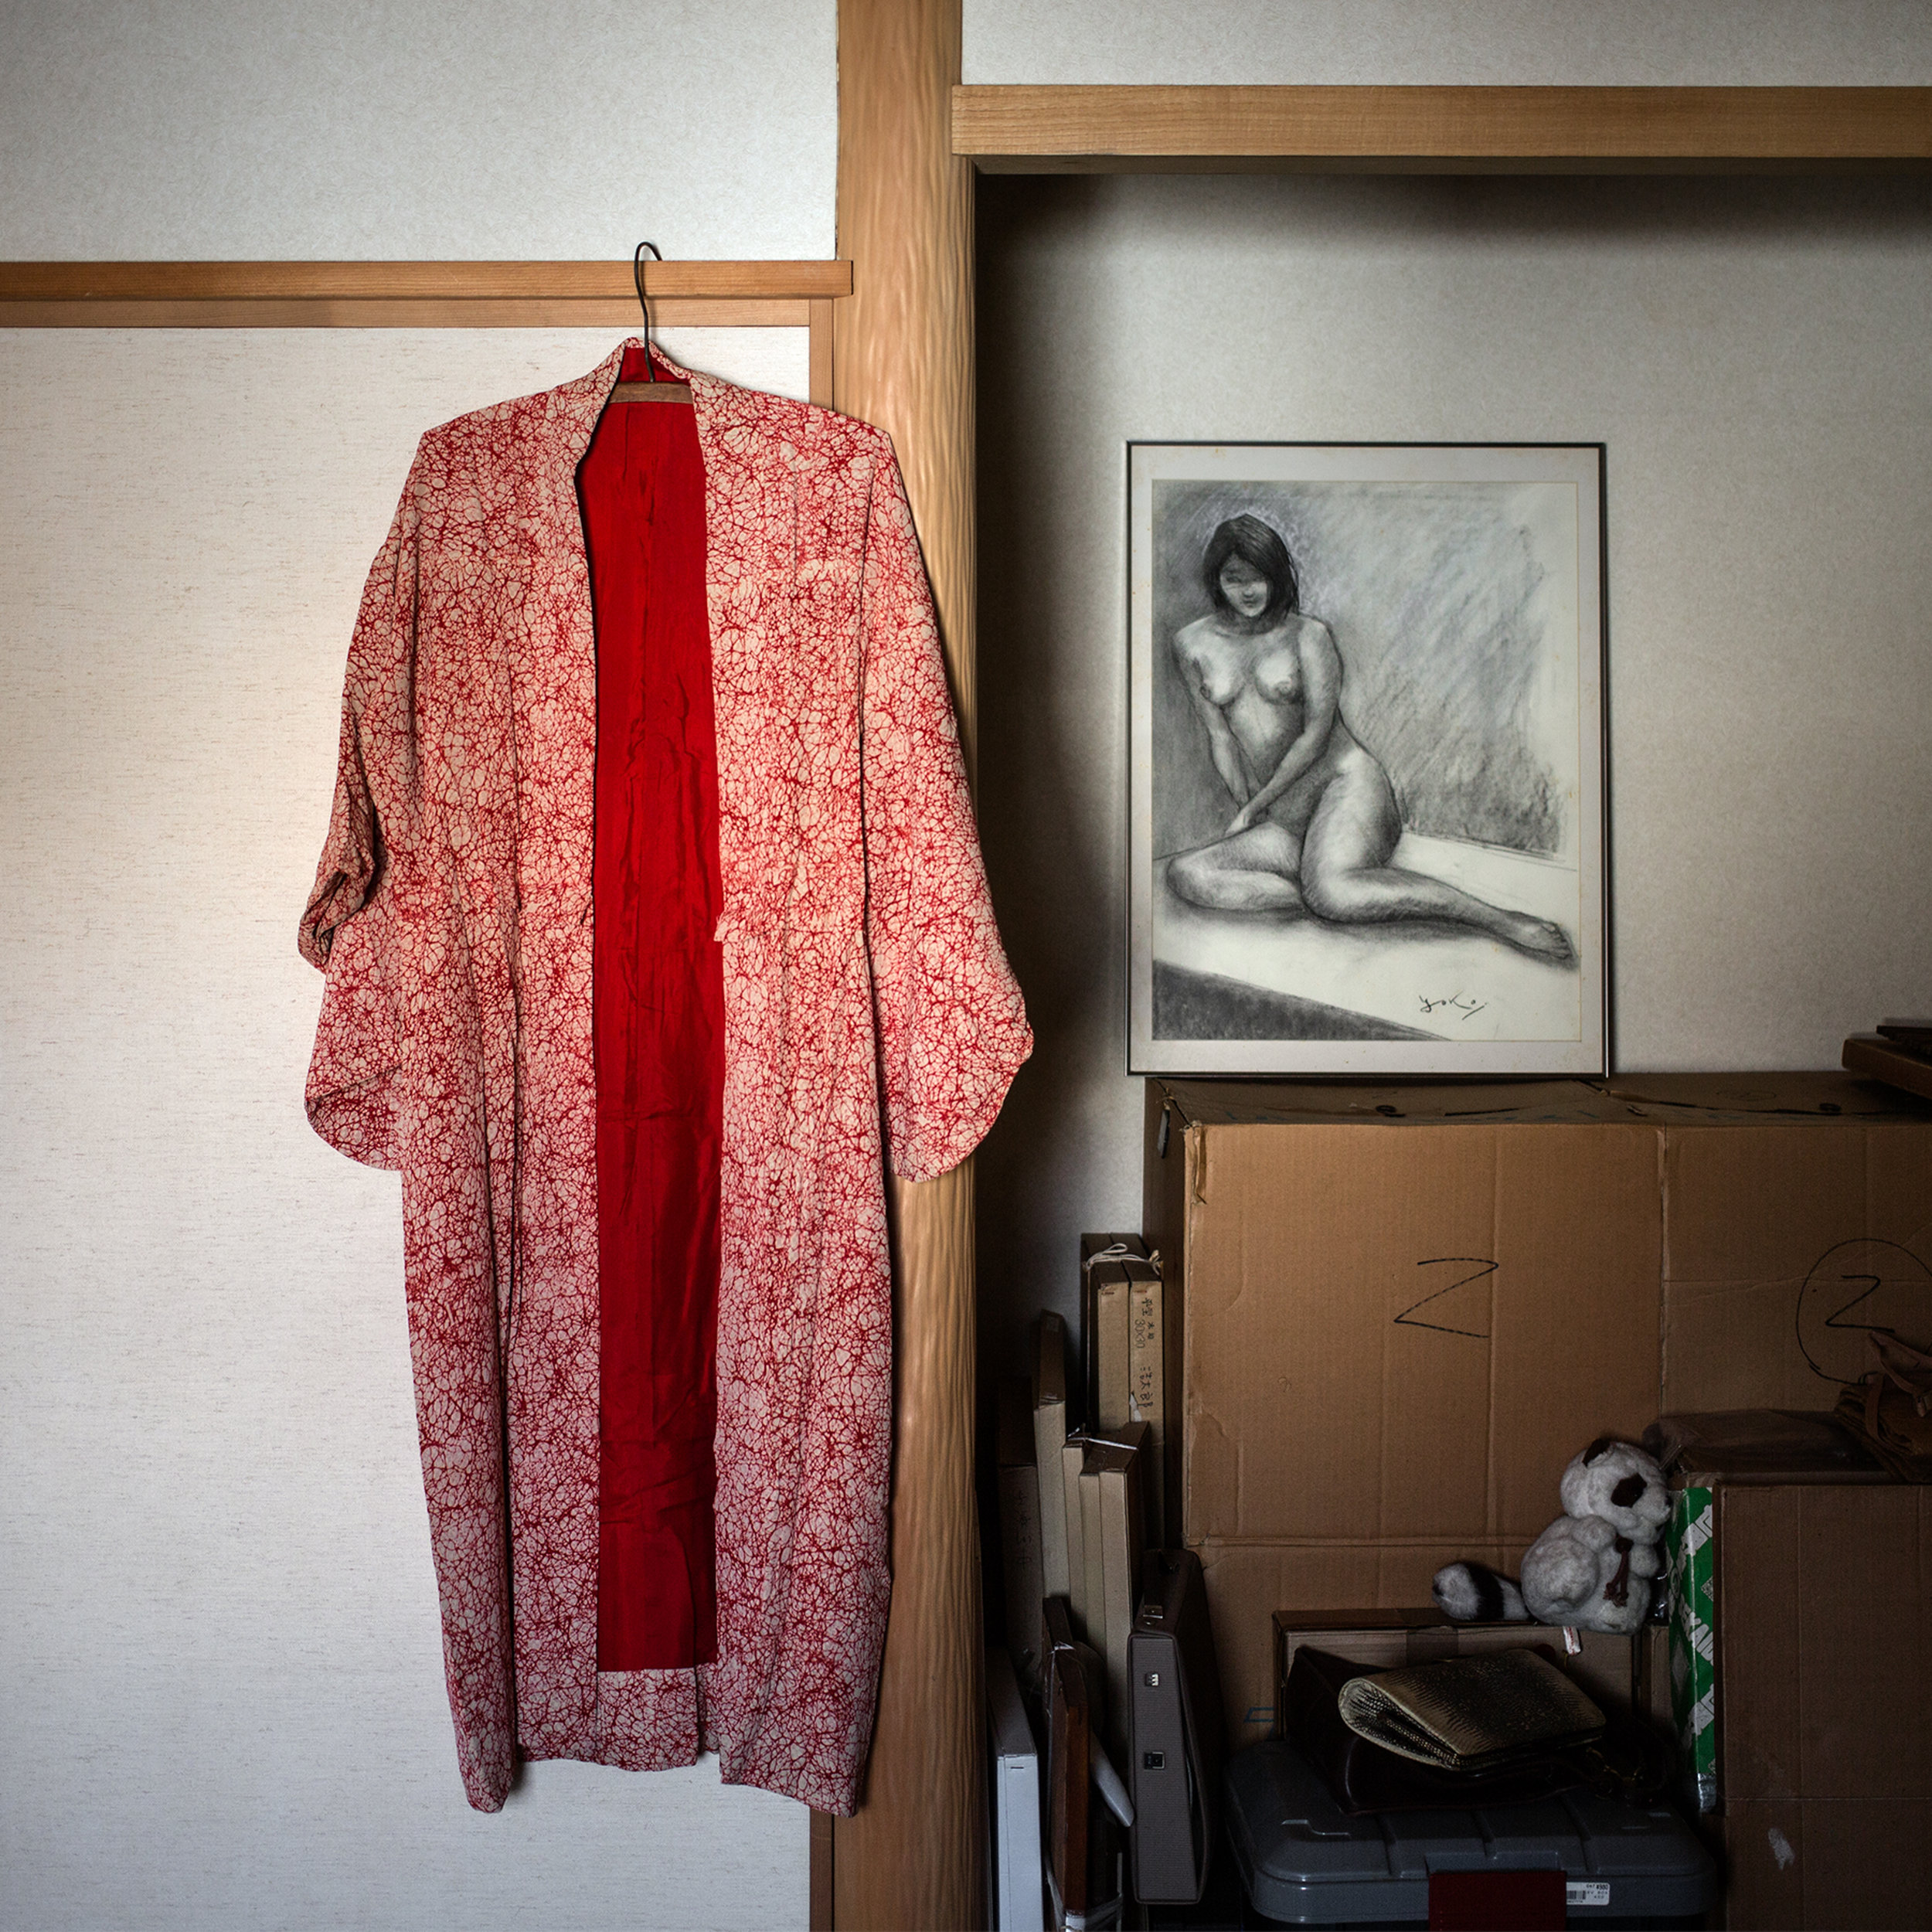   Red Juban, Ninomiya, Summer 2013  from "Kai" 